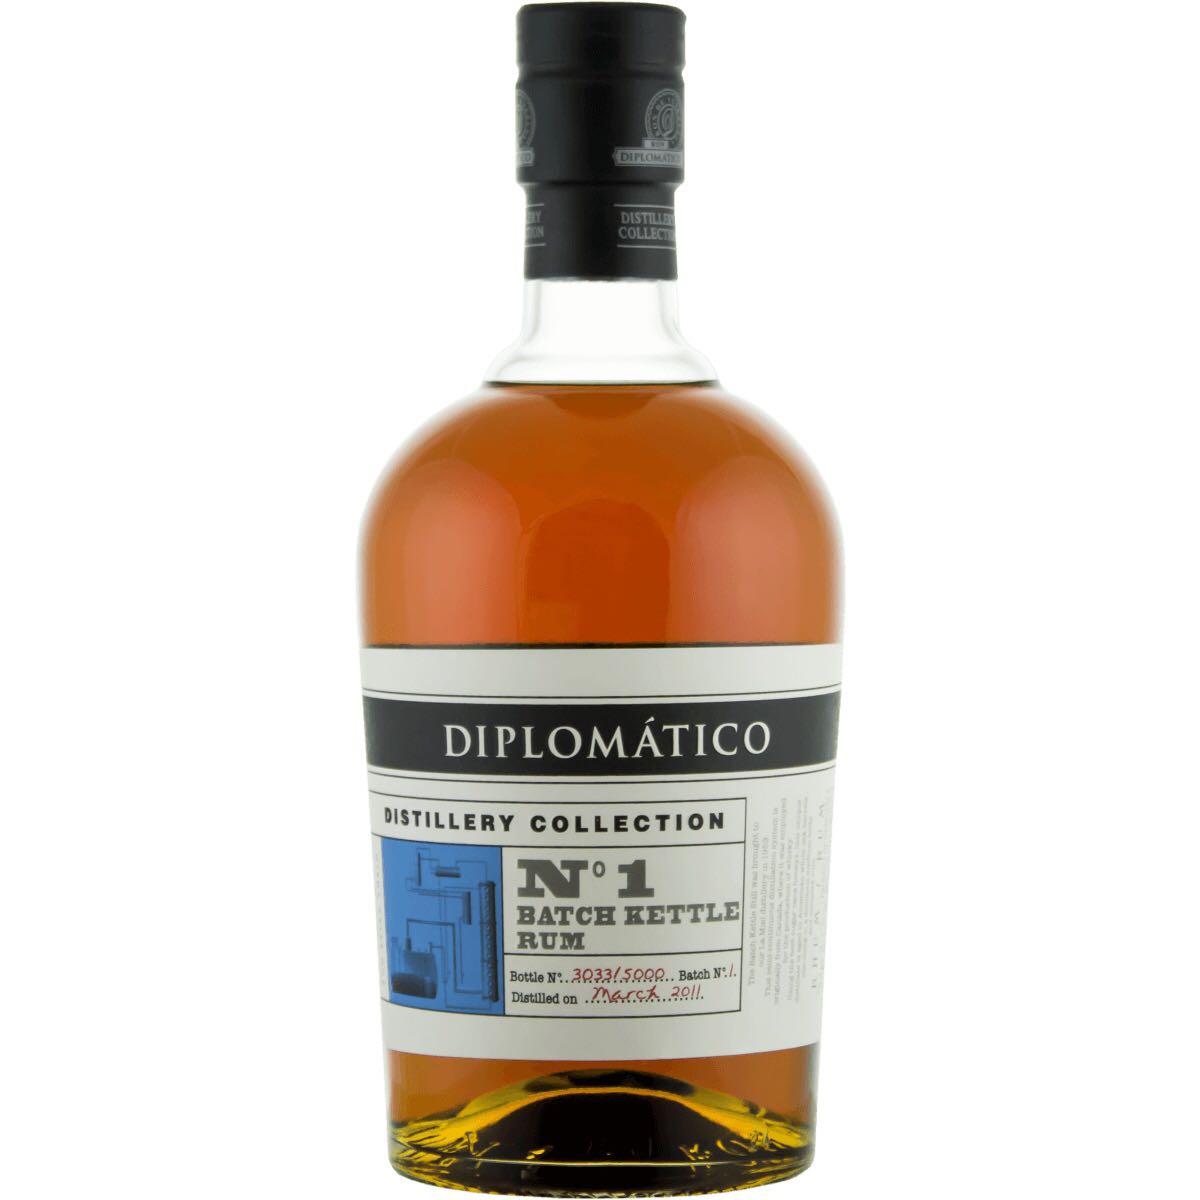 Bottle image of Diplomático / Botucal No. 1 Single Batch Kettle Rum